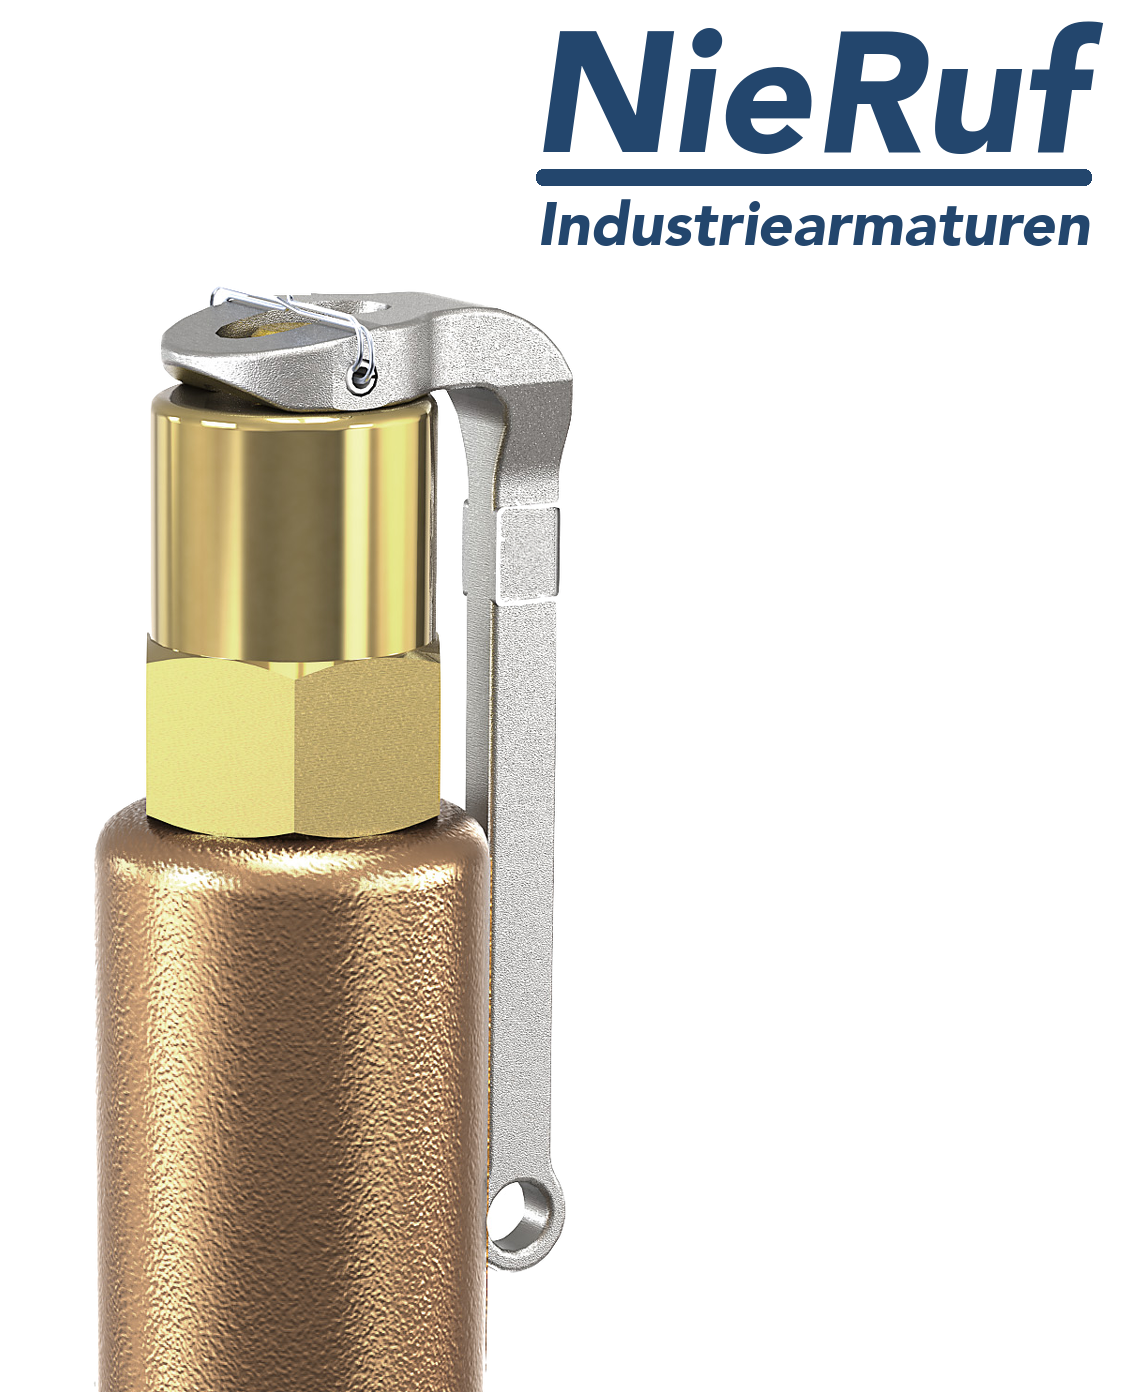 safety valve 1/2" x 1" fm SV03 neutral liquid media, gunmetal EPDM, with lever